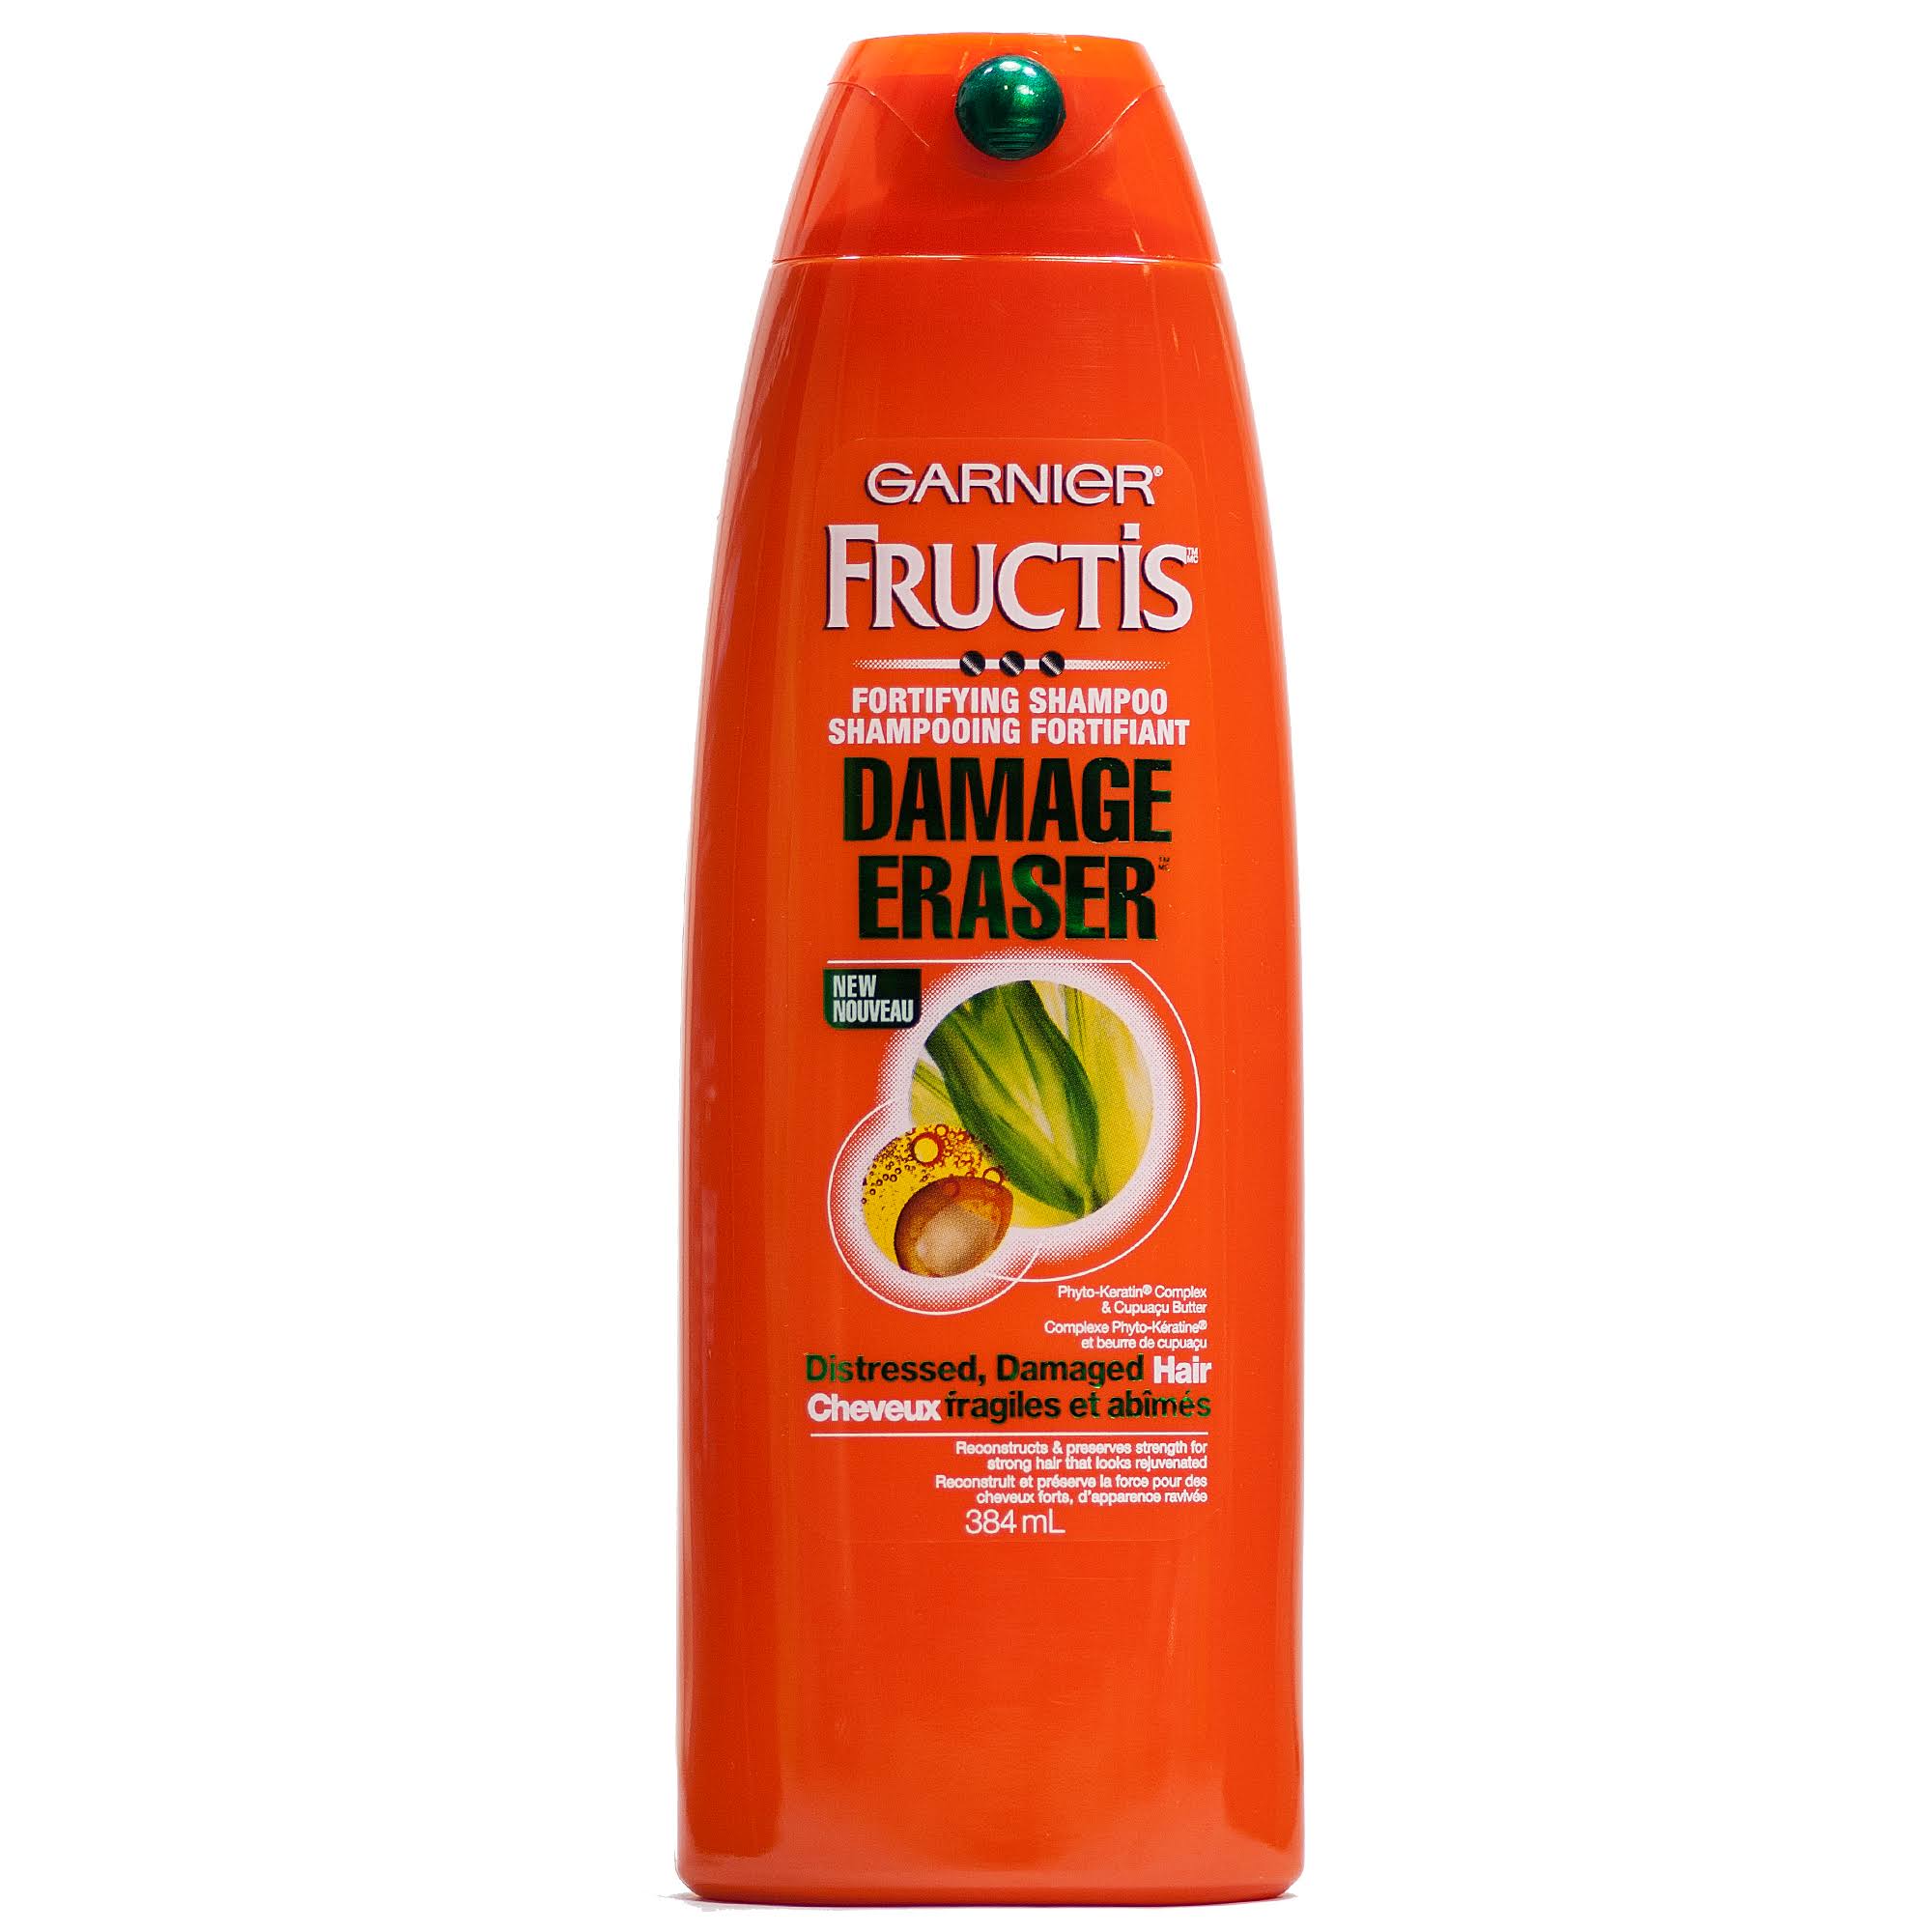 Garnier Hair Care Fructis Damage Eraser Shampoo